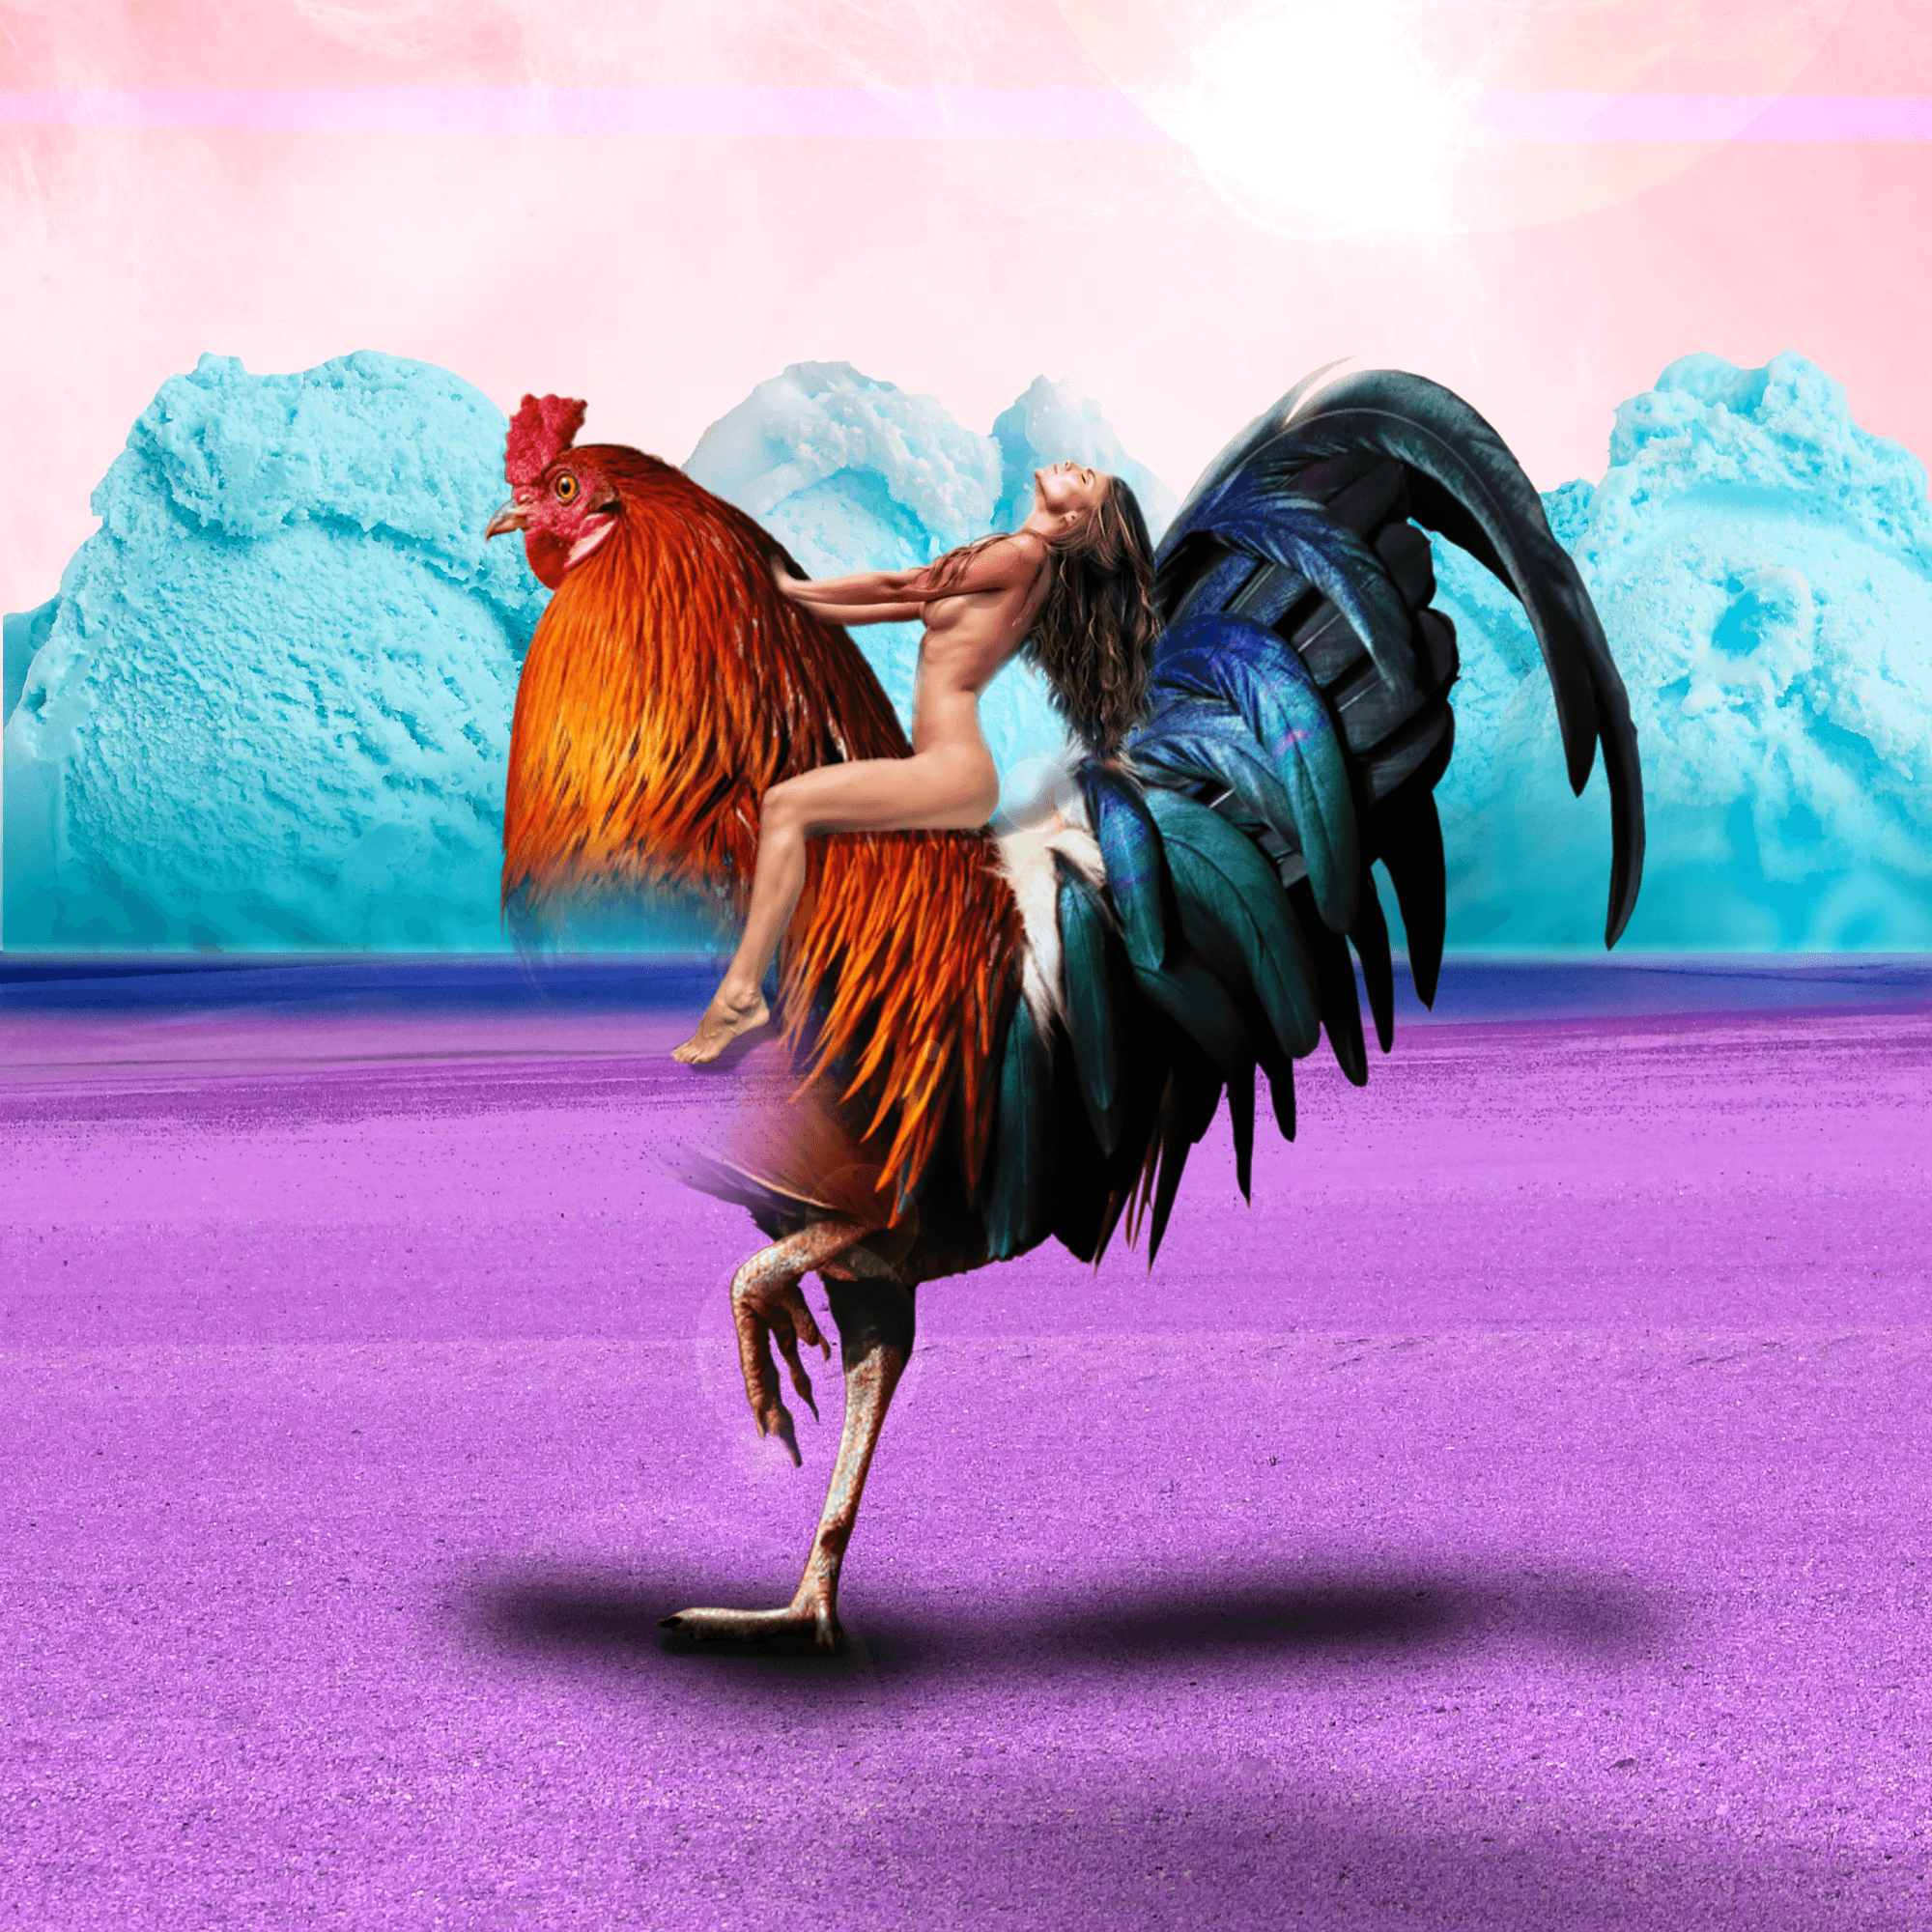 Princess Urethruclite Riding Medium-Sized Domestic Ghost Cock on Planet Miænus 69-B in Light of the Binary Star